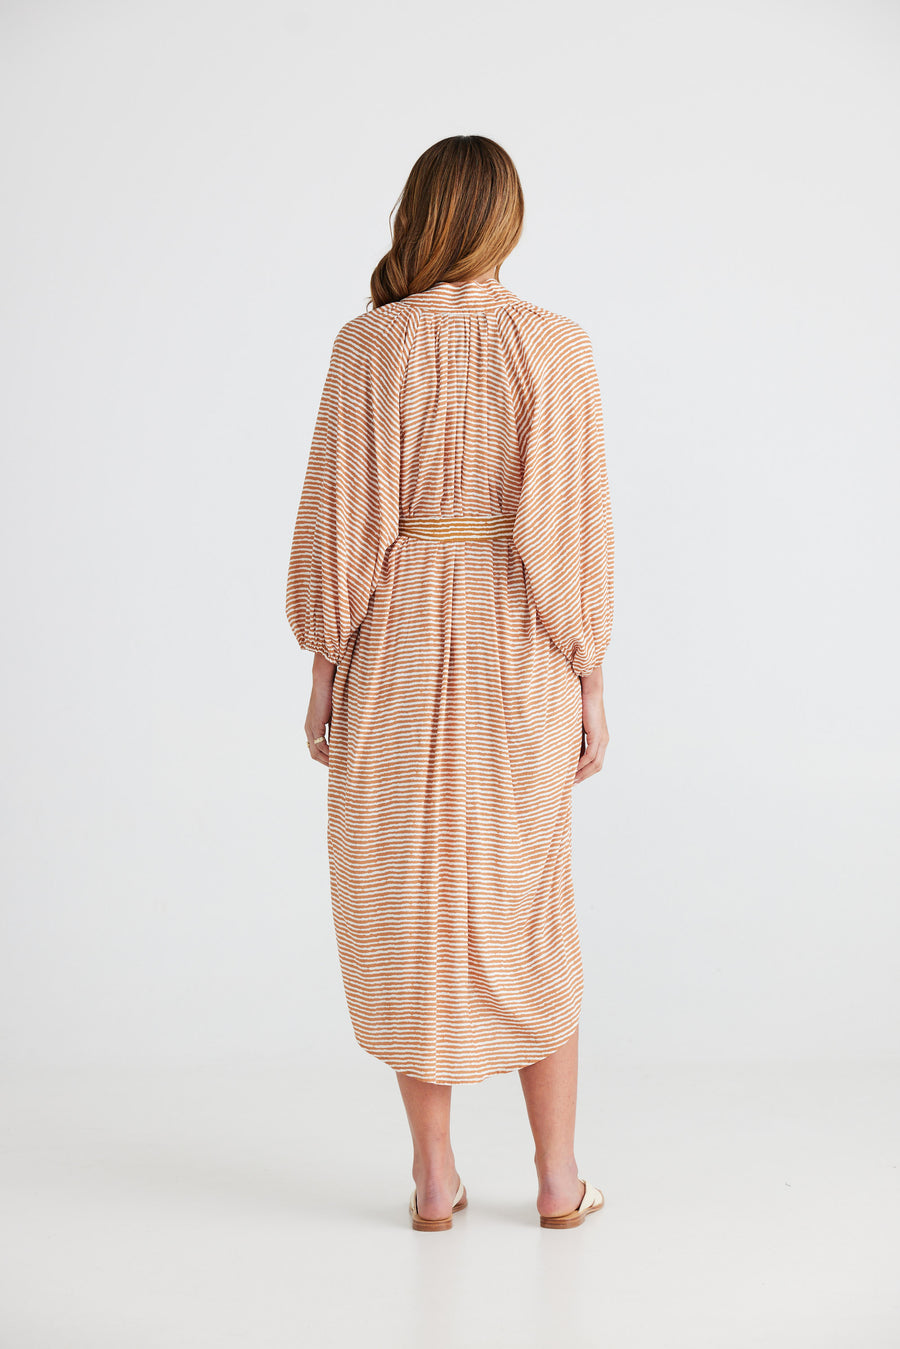 Second Valley Dress - Tan Stripe